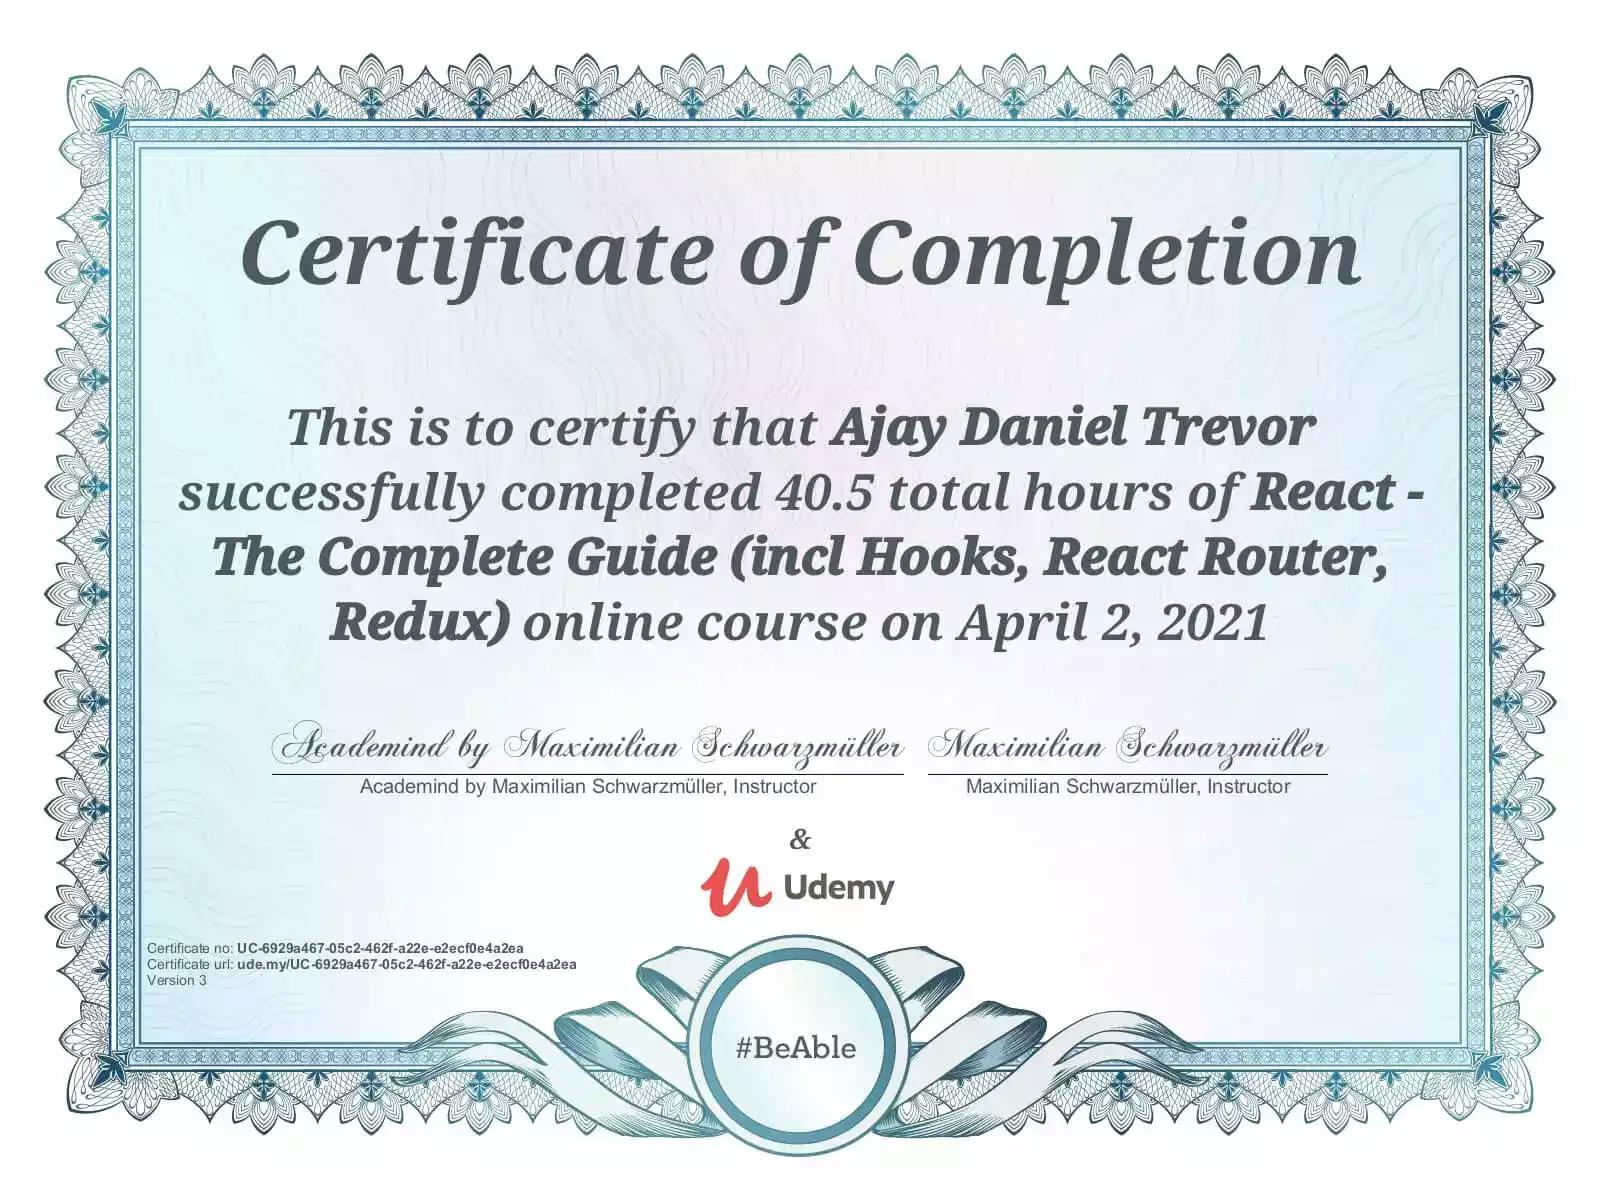 ReactJS Certificate